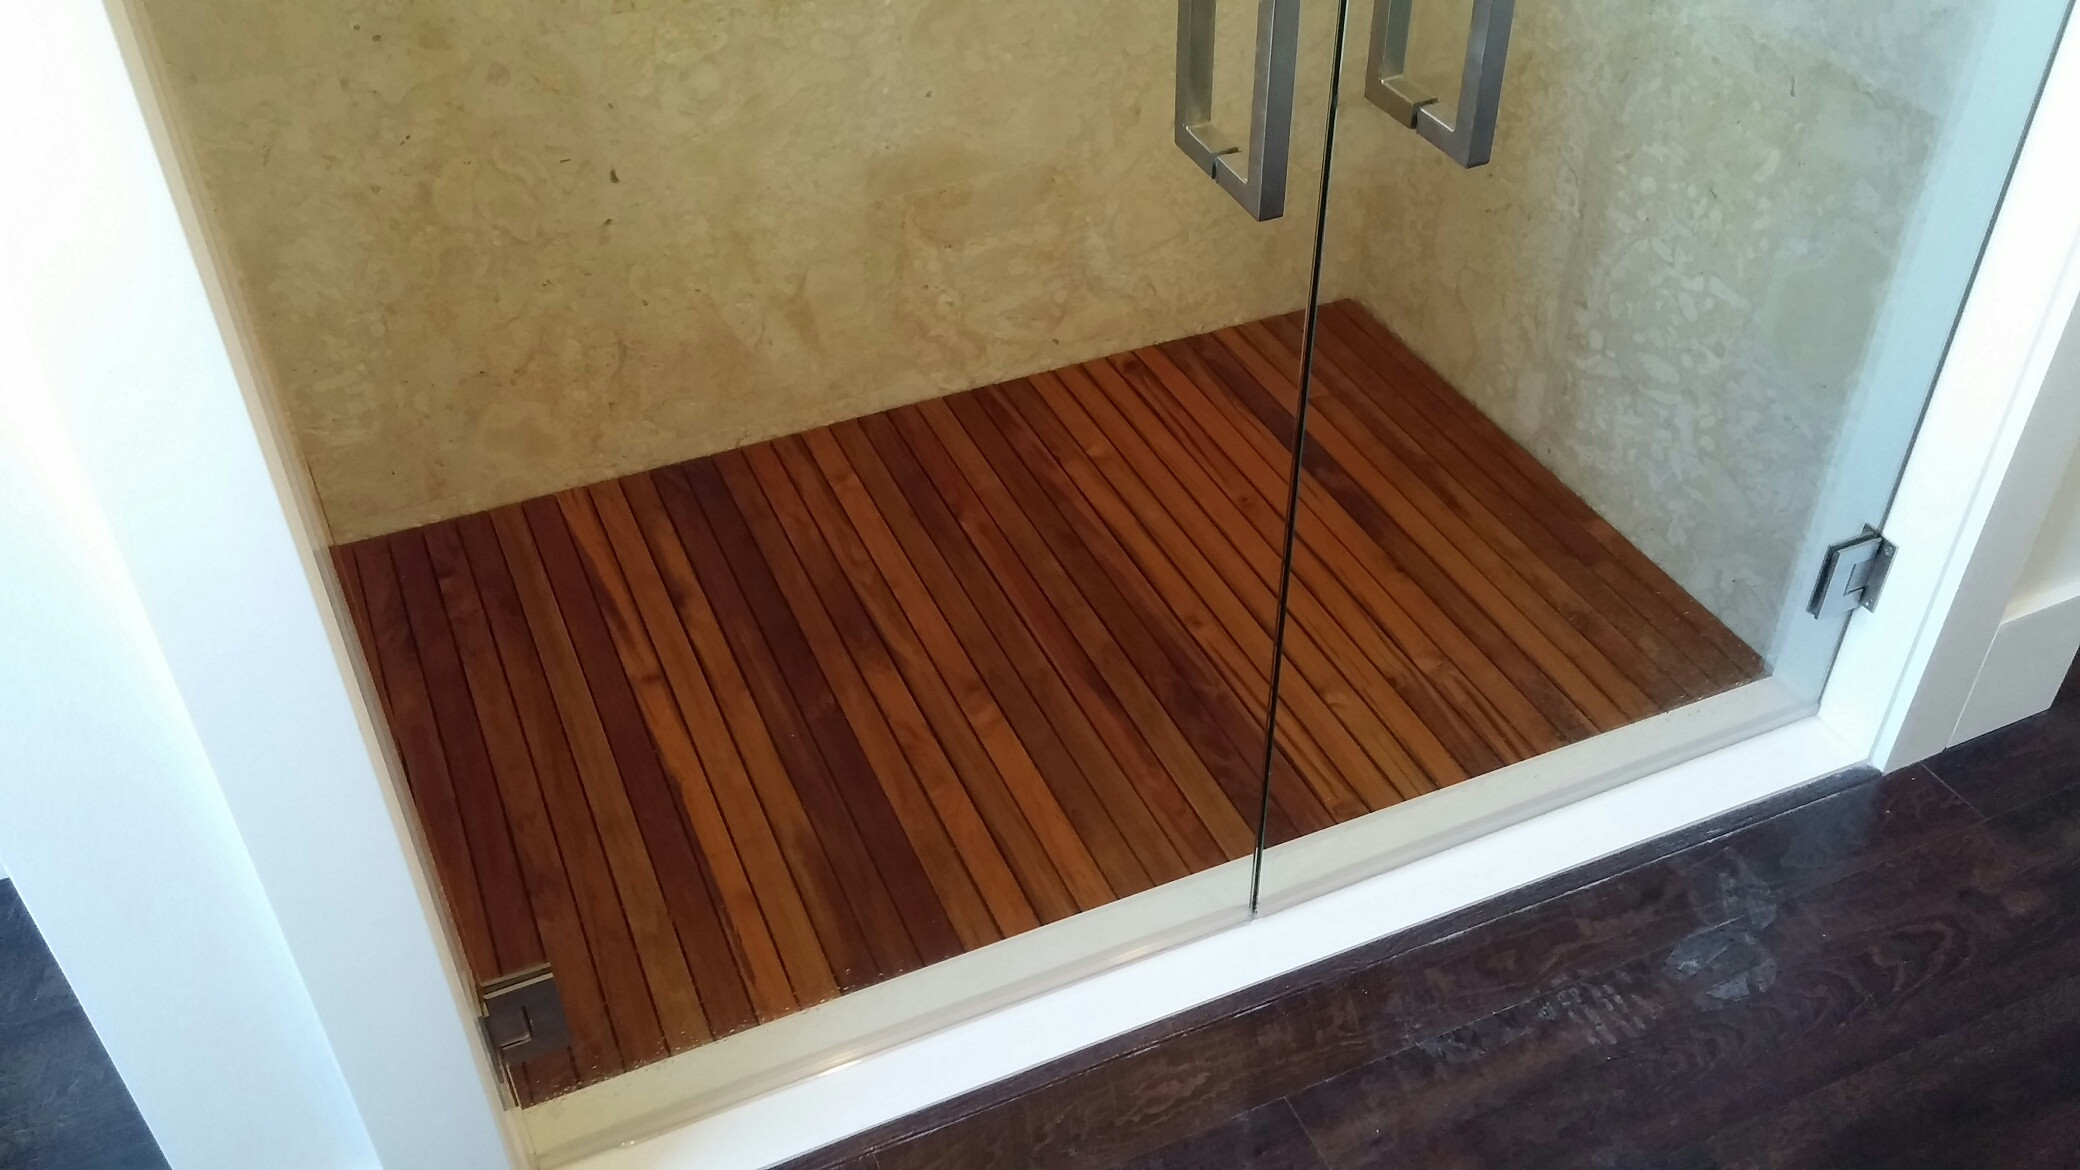 Best ideas about DIY Teak Shower Floor
. Save or Pin Teak Bathtub Mat — TEAK FURNITURESTEAK FURNITURES Now.